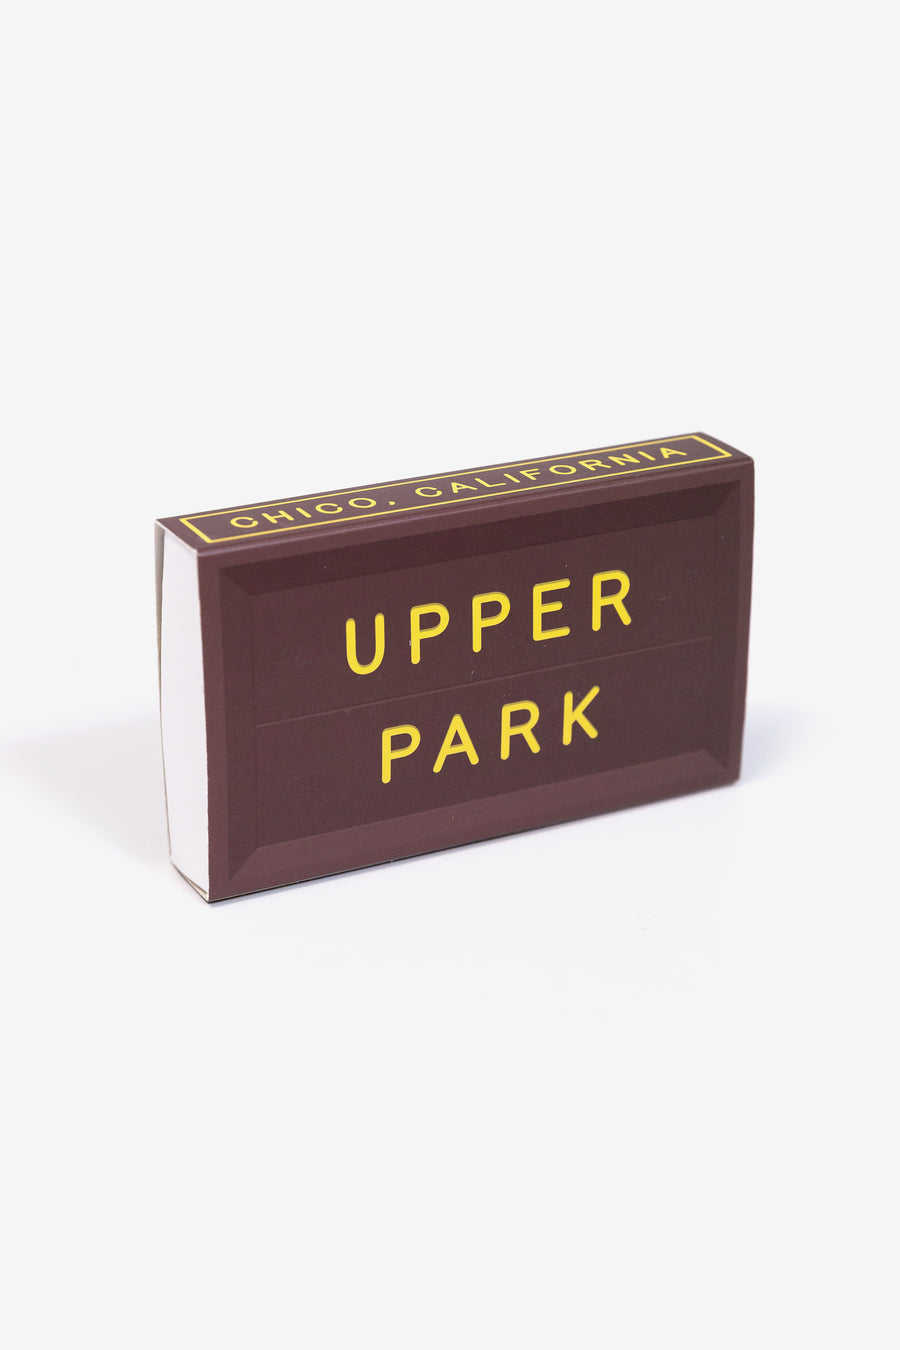 Upper Park Sign Matches - Chico, California - 4" Box